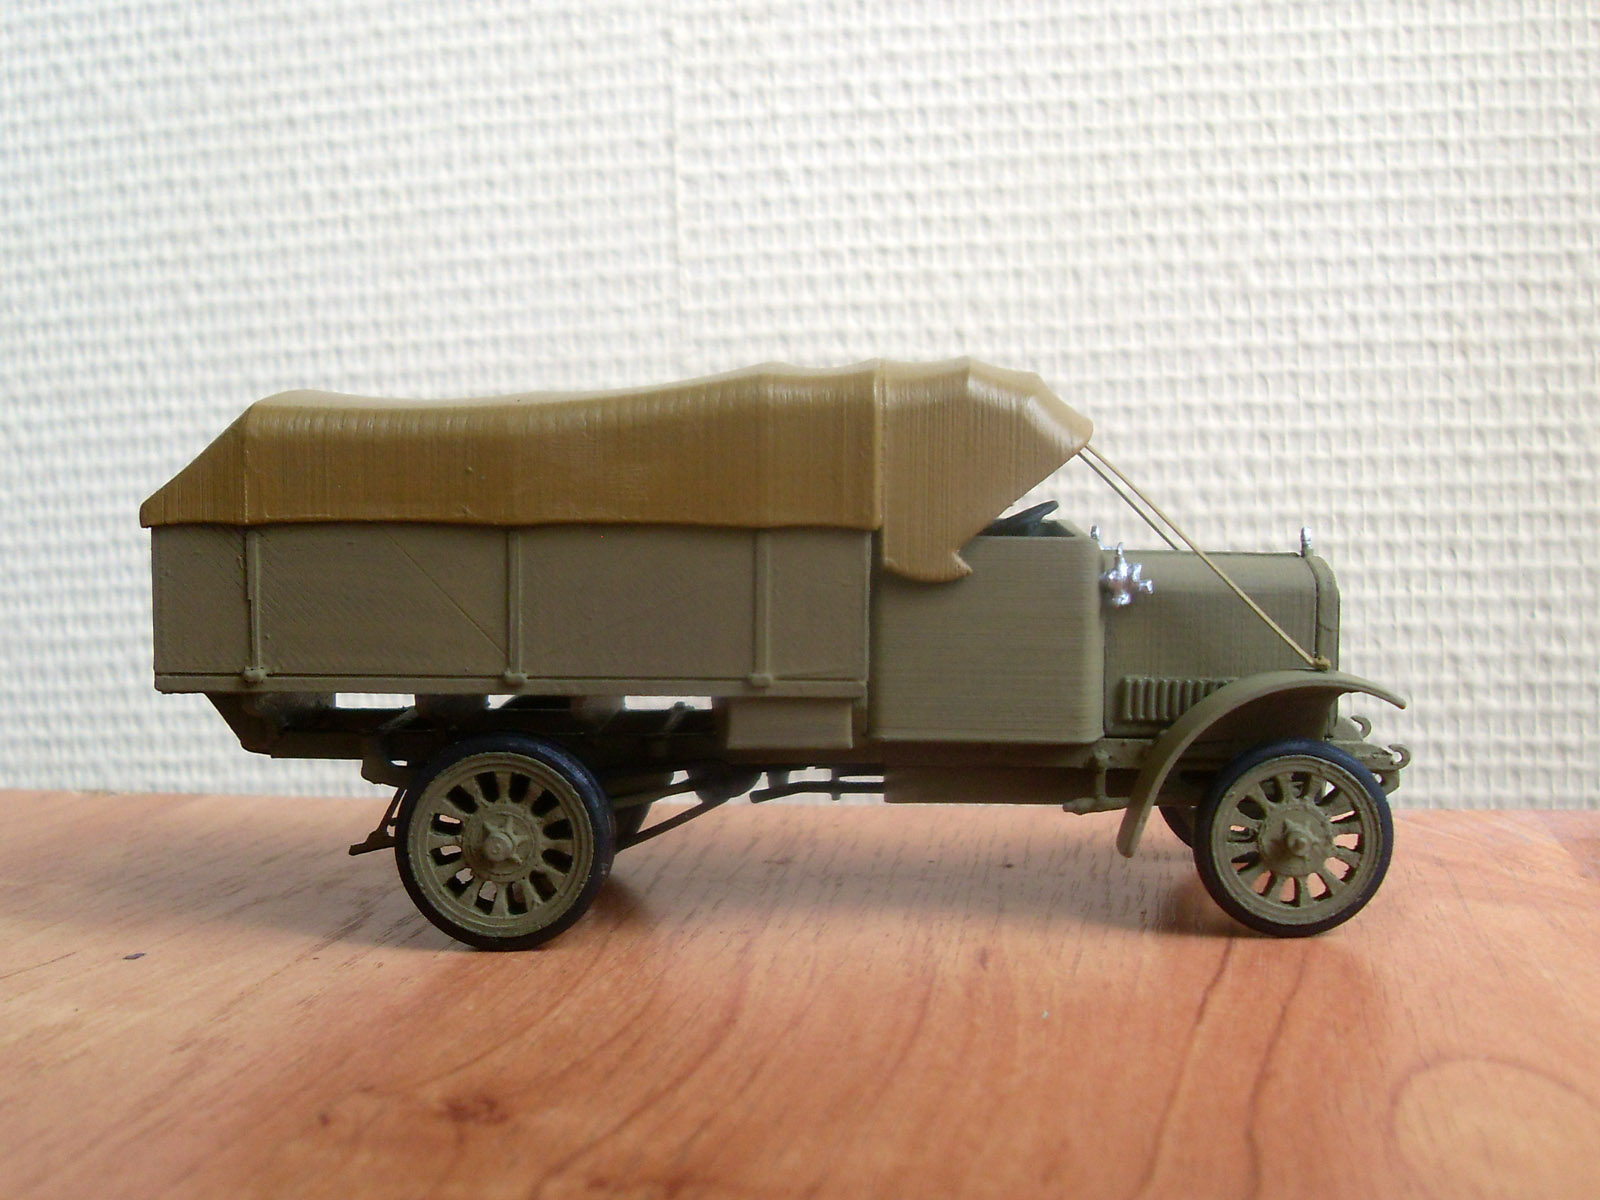 Т балт. Руссо-Балт т40-65. Бронеавтомобиль Руссо-Балт 1914. Руссо Балт концепт 2020. Зенитный бронеавтомобиль «Руссо-Балт Тип т».